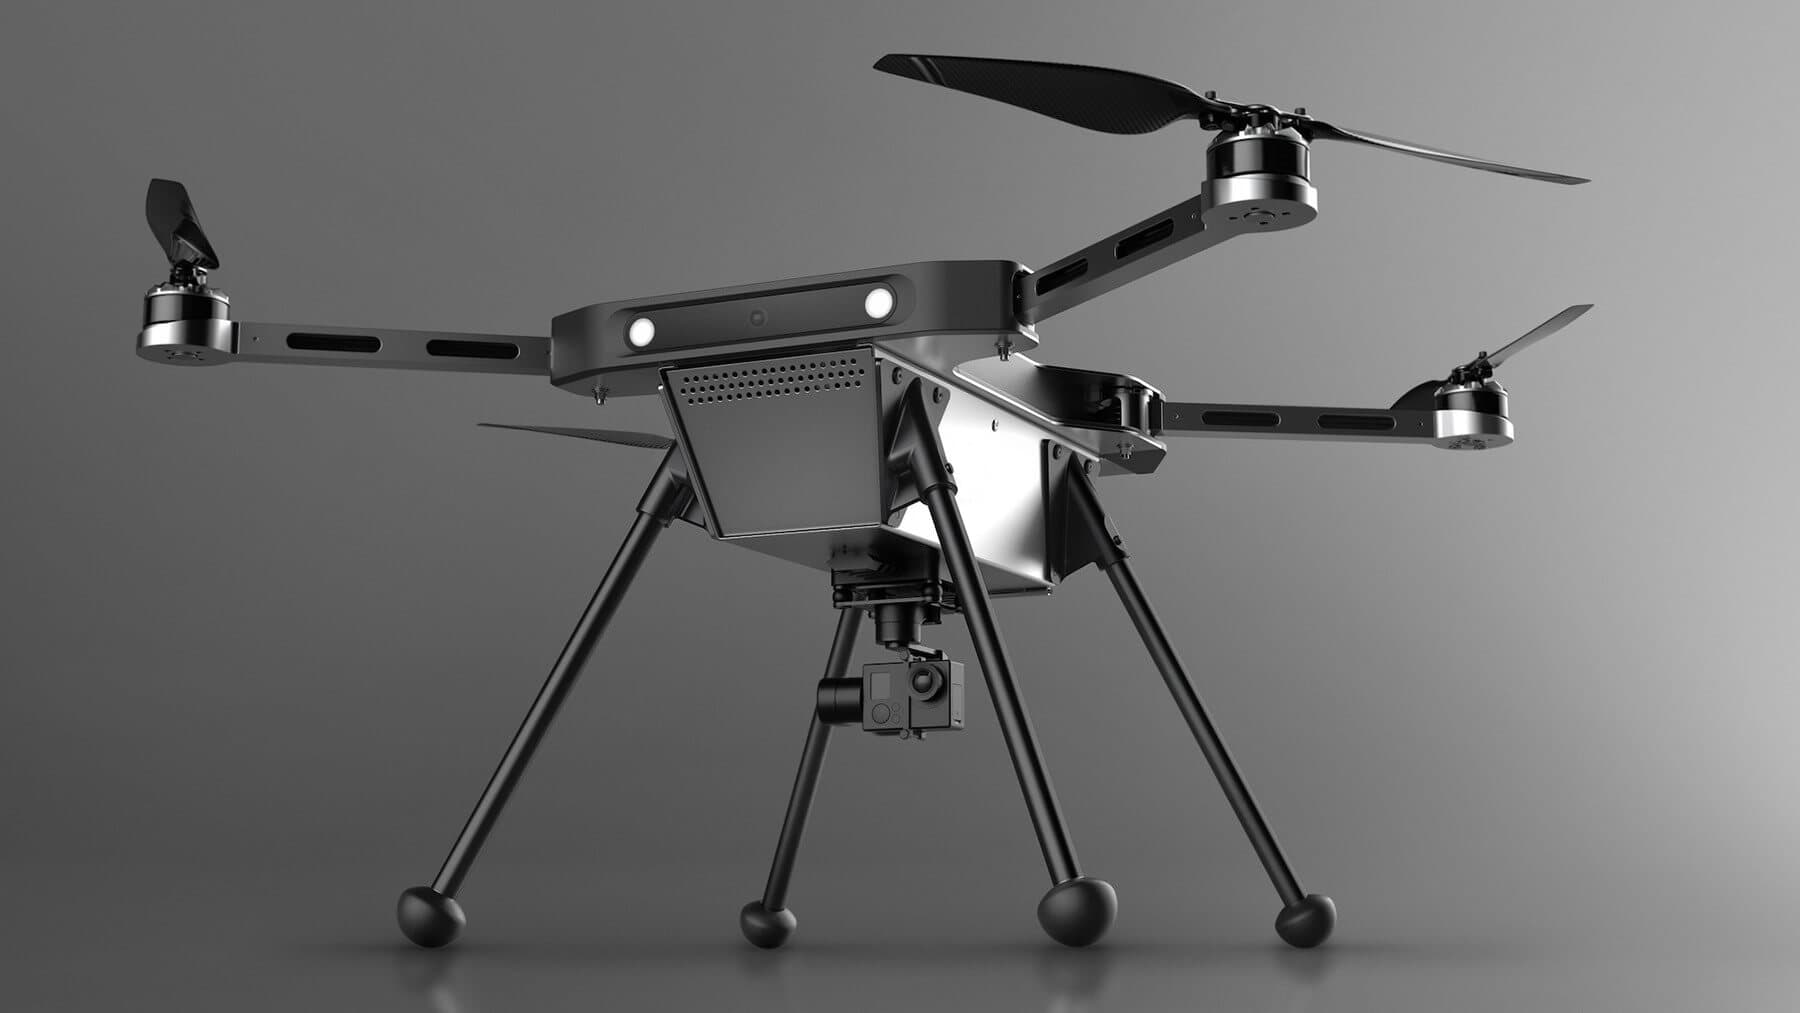 Teague Industrial Drone 1